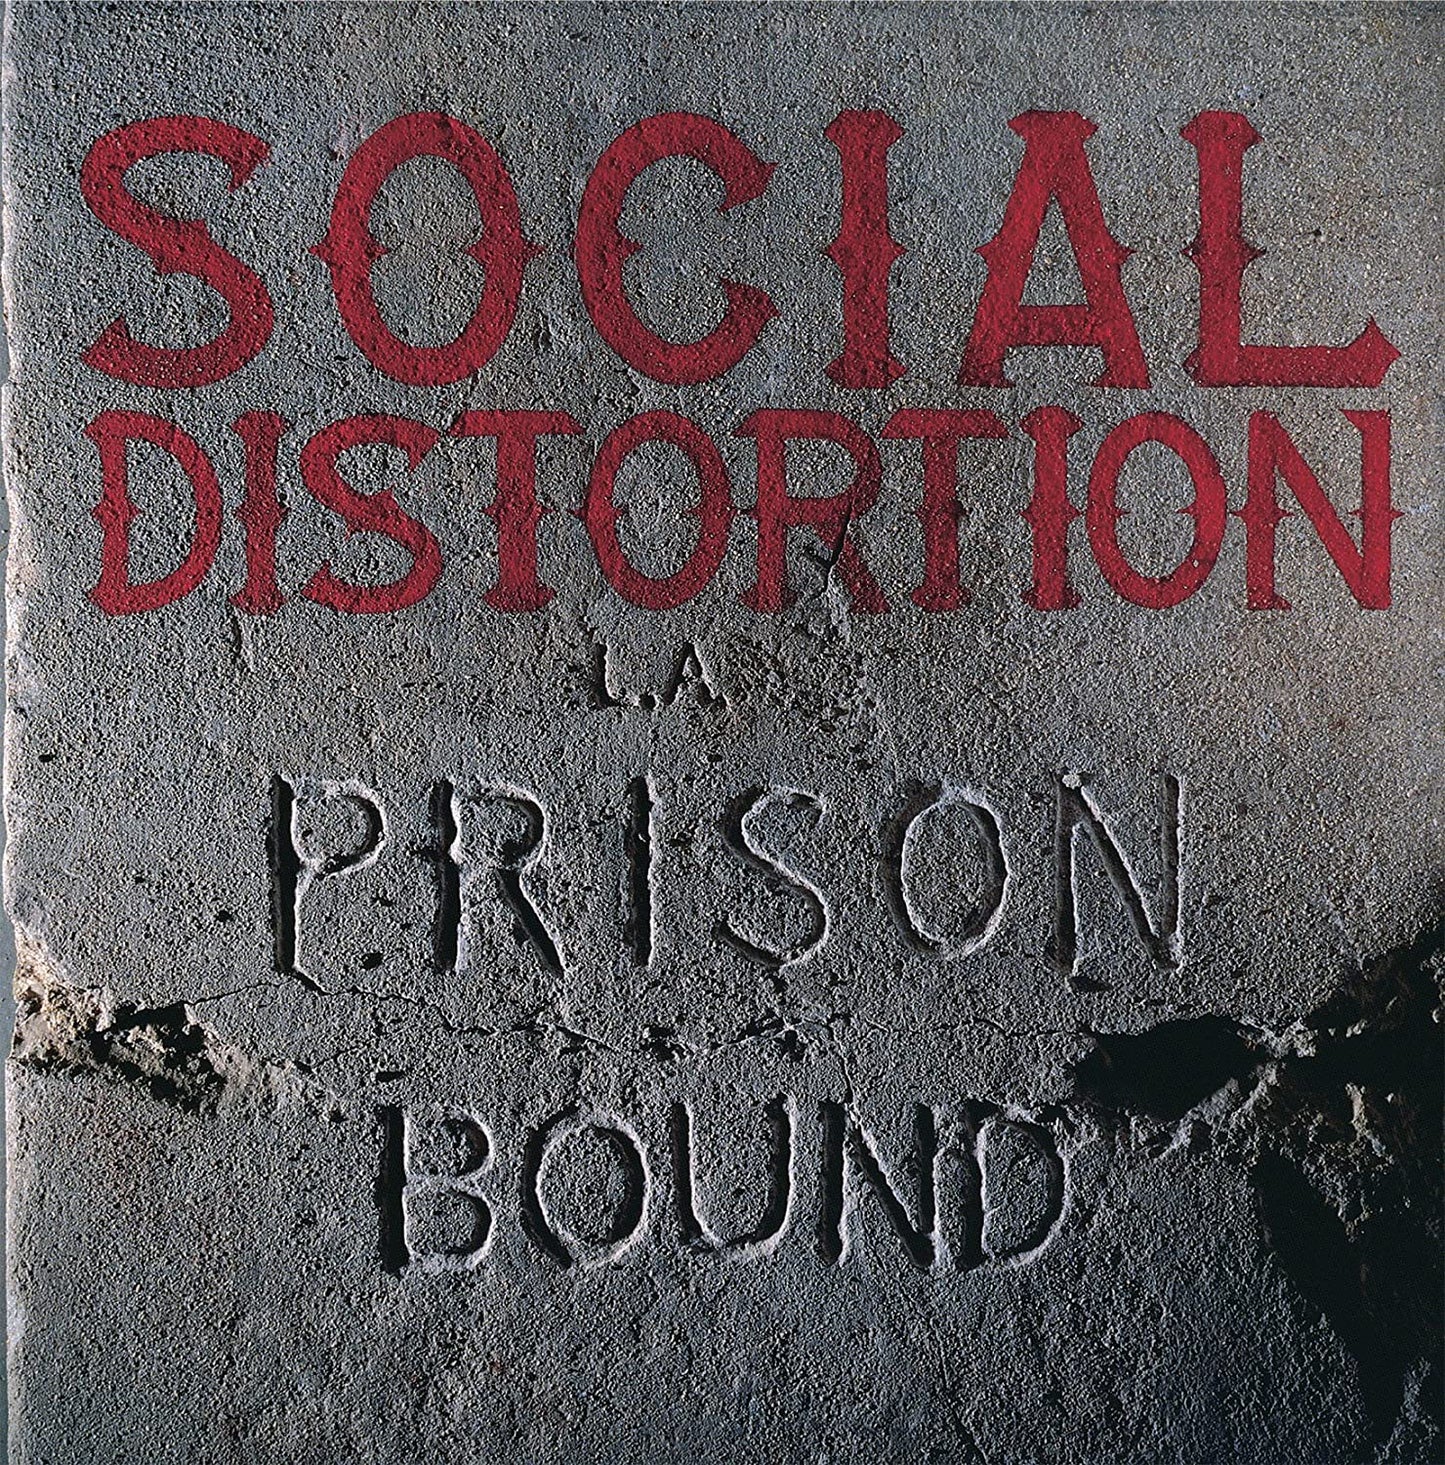 Social Distortion — Prison Bound